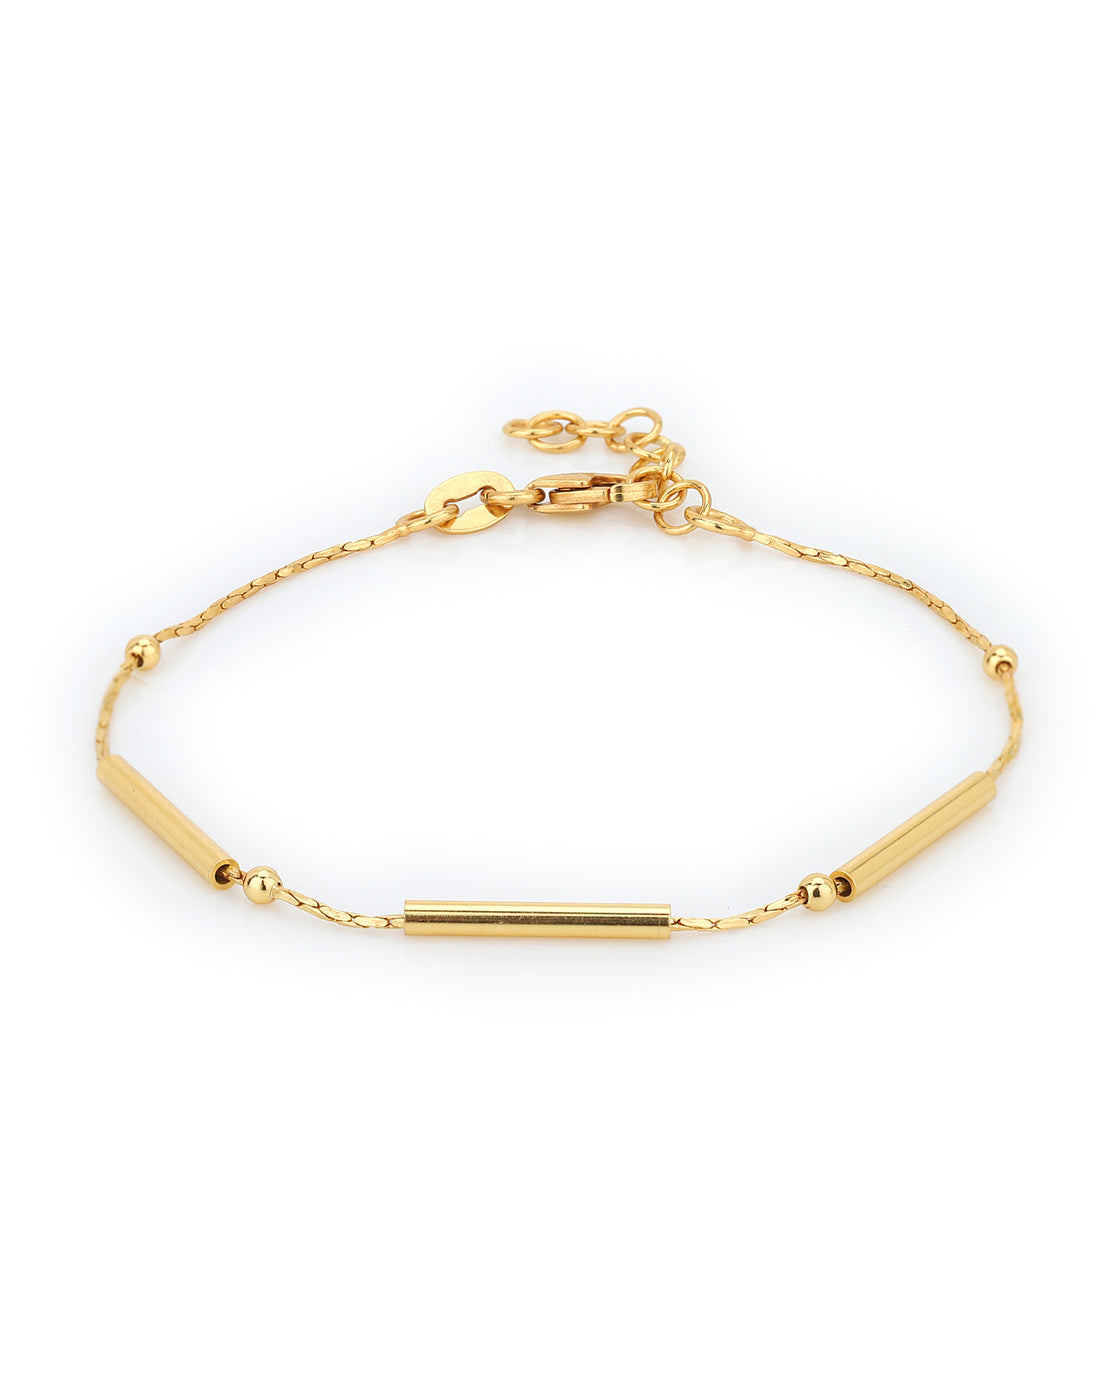 Star Charm Bracelet Solid 14K Real Gold Adjustable Cable Chain Bracelet  Women | eBay